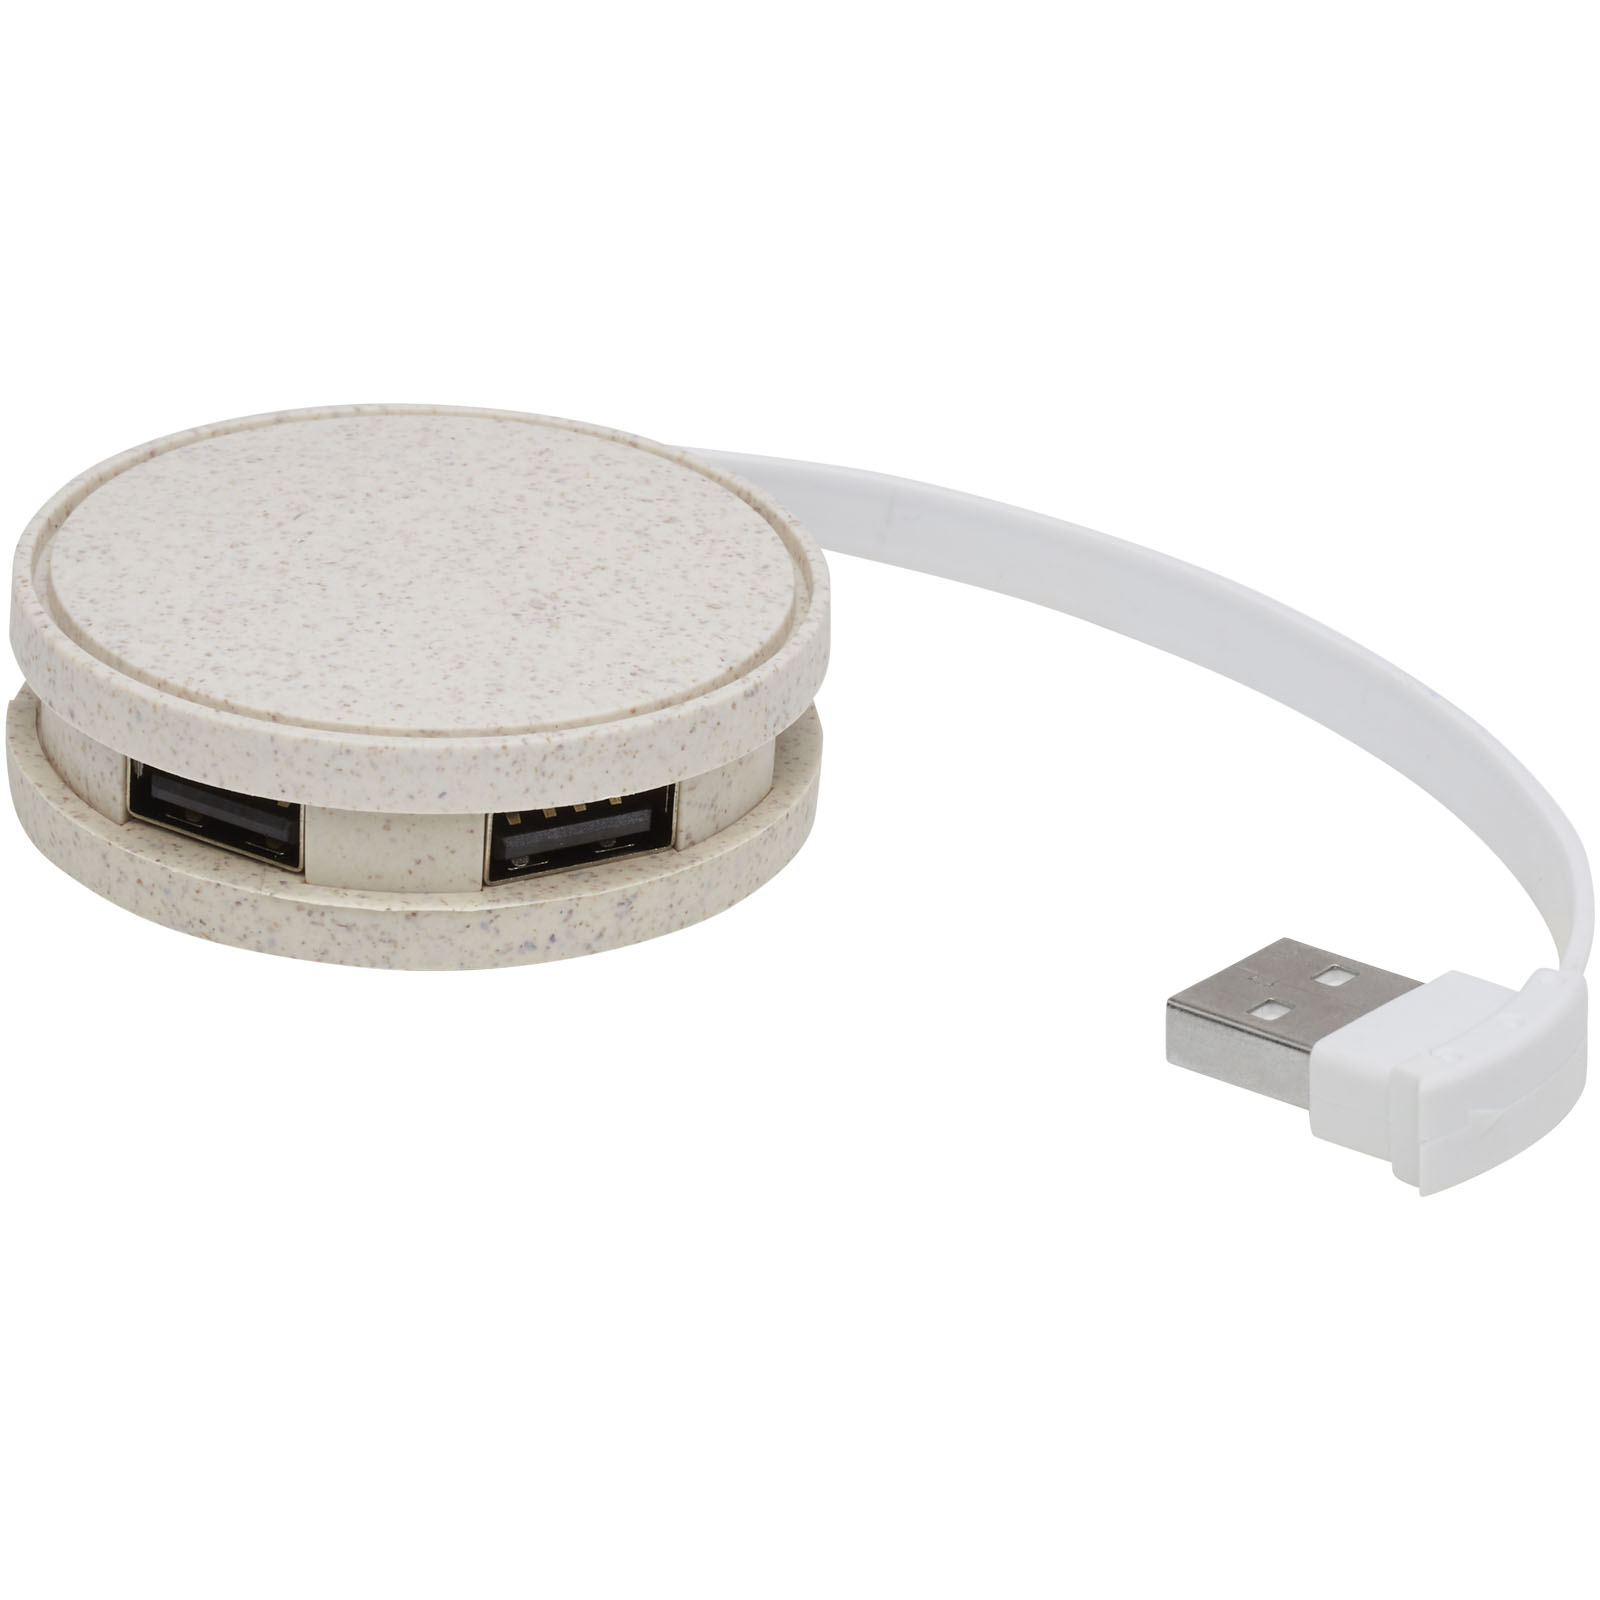 Technology - Kenzu wheat straw USB hub